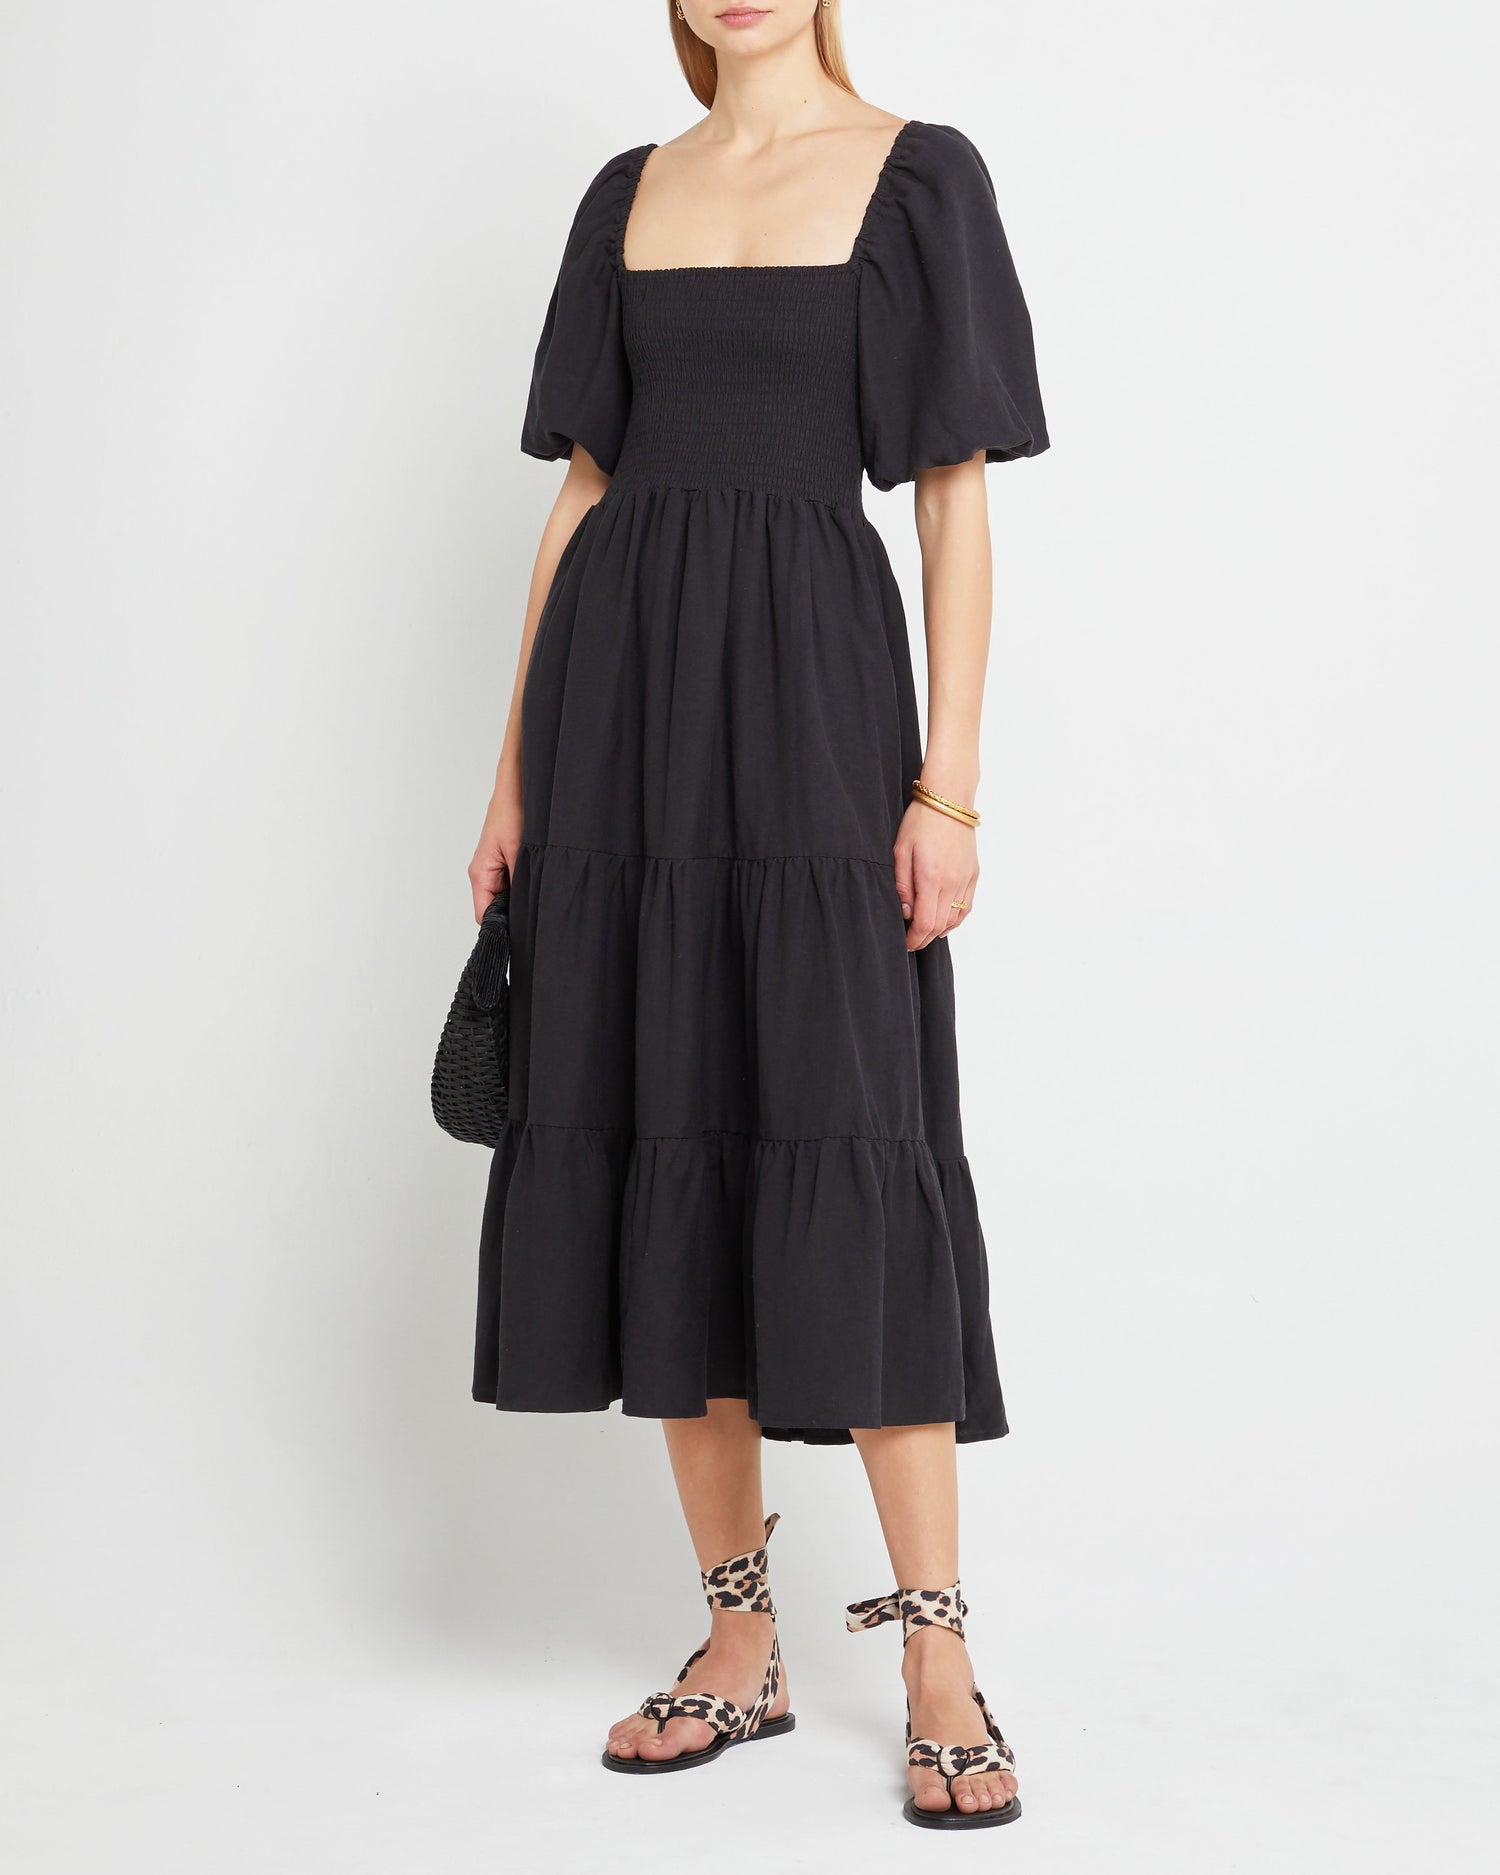 Third image of Hera Dress, a black midi dress, smocked, puff sleeves, cap sleeves